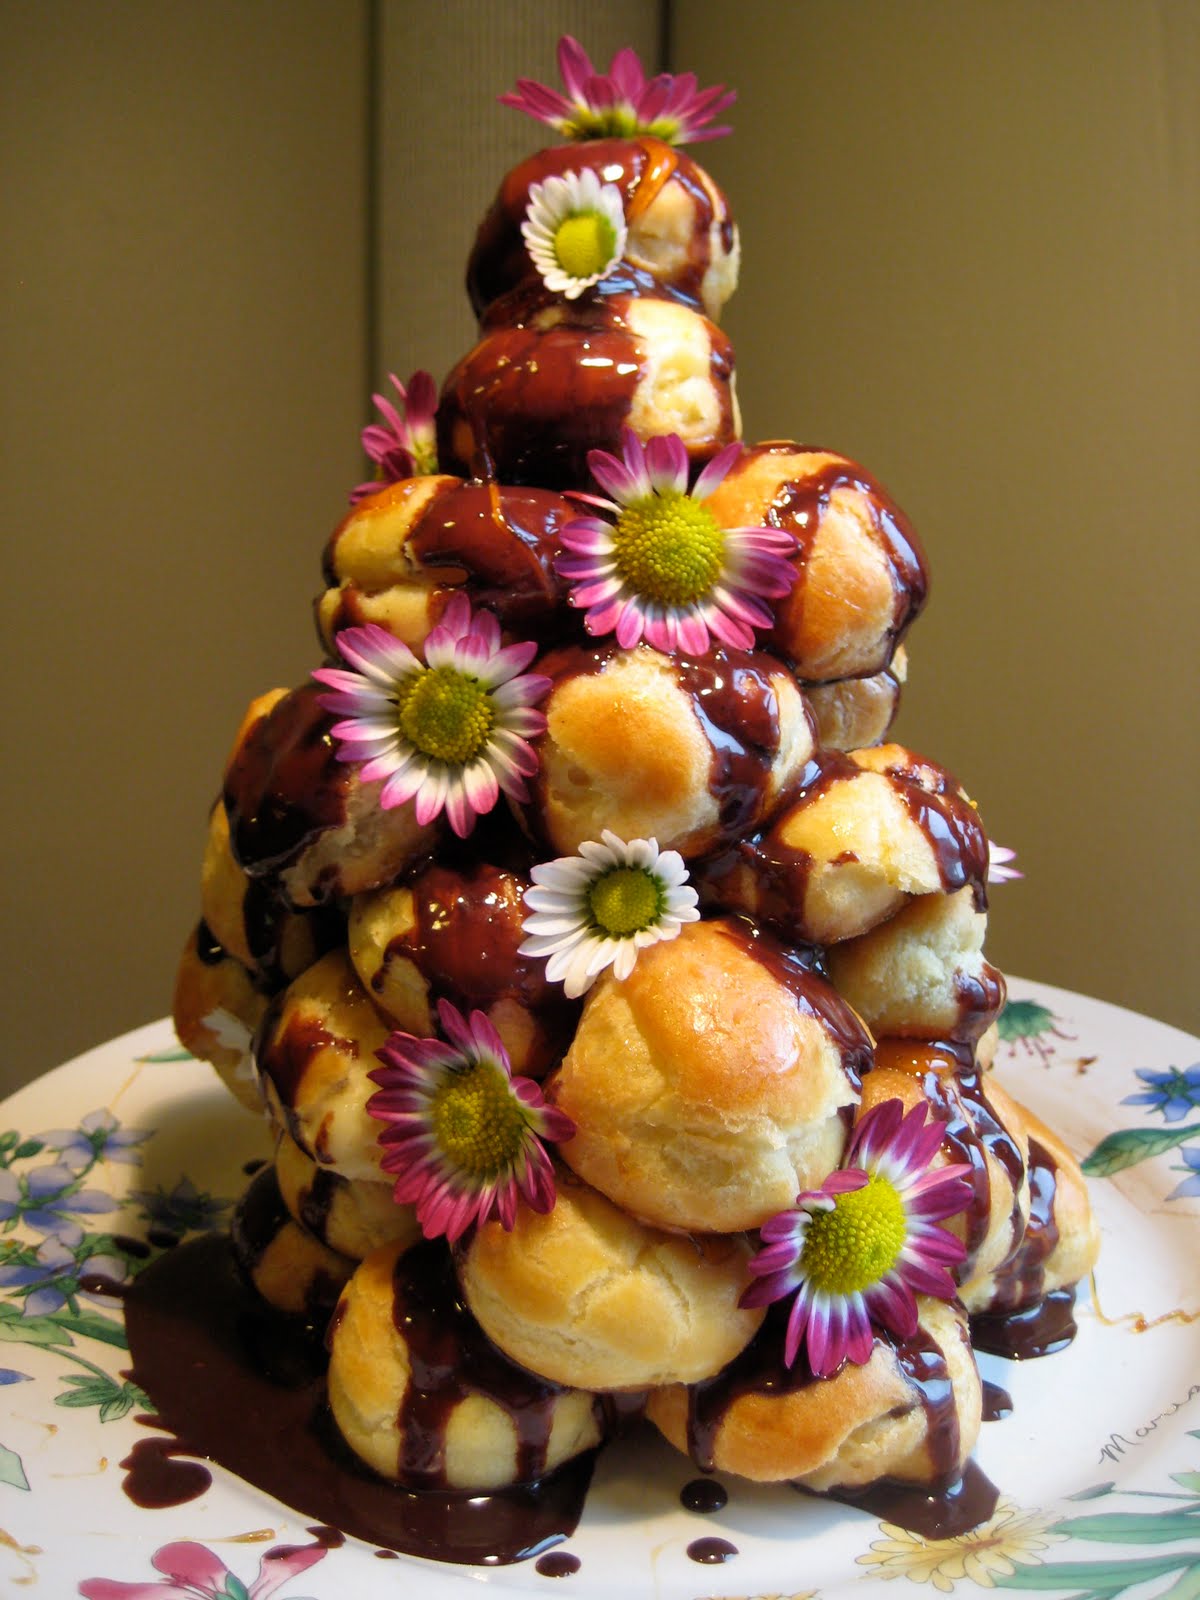 The Cupcake Life: Celebratory Cream Puff Tower